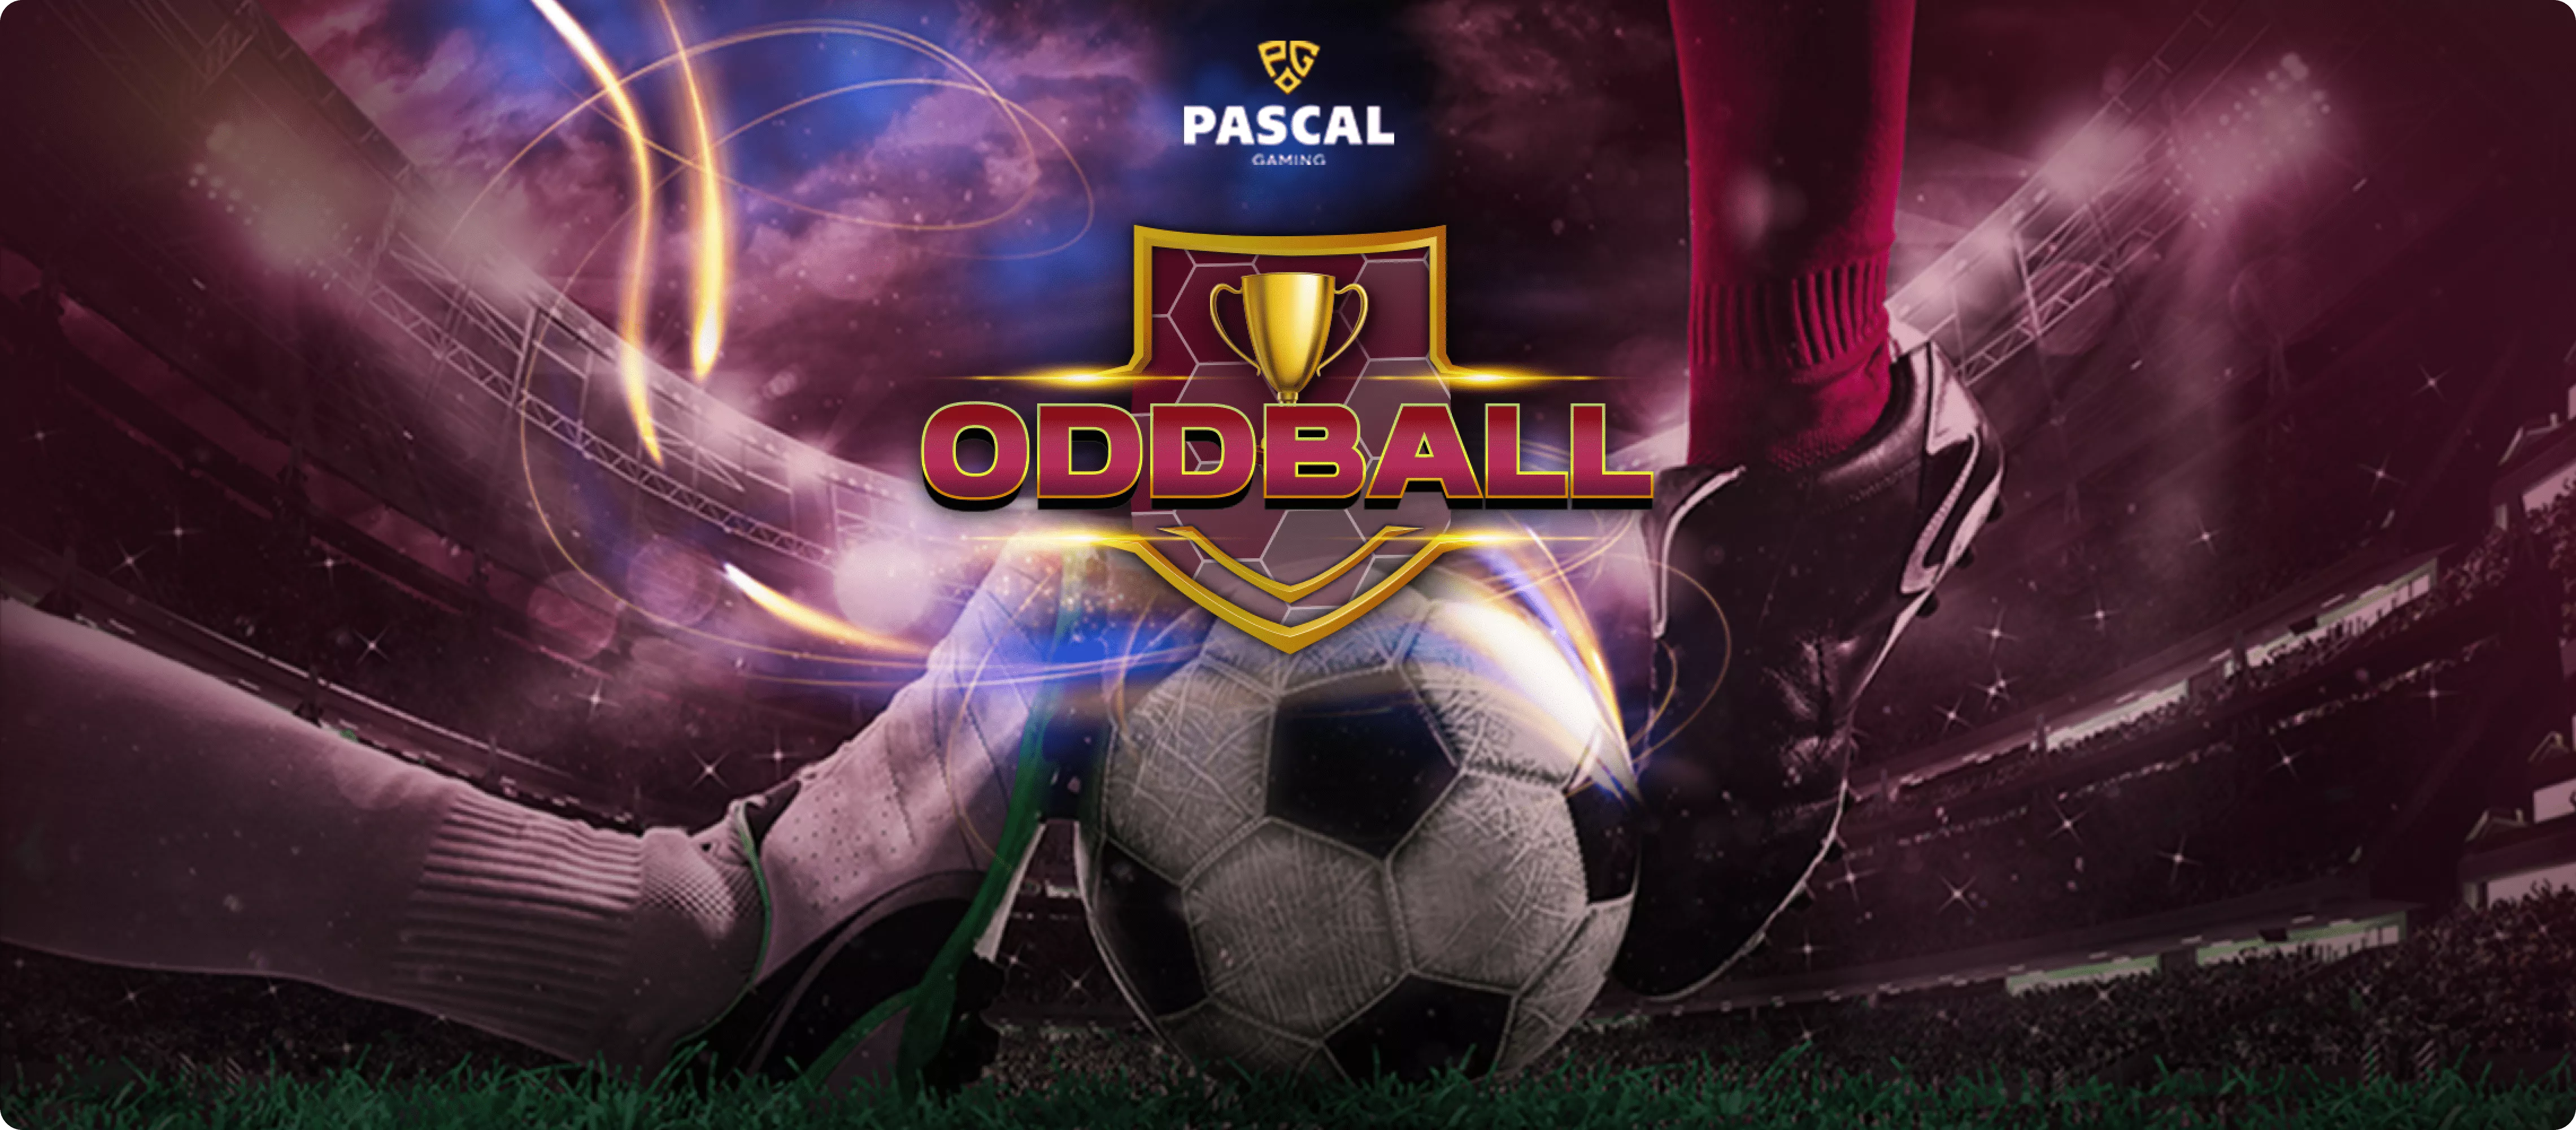 Pascal Gaming Introduces New Crash Game - Odd Ball